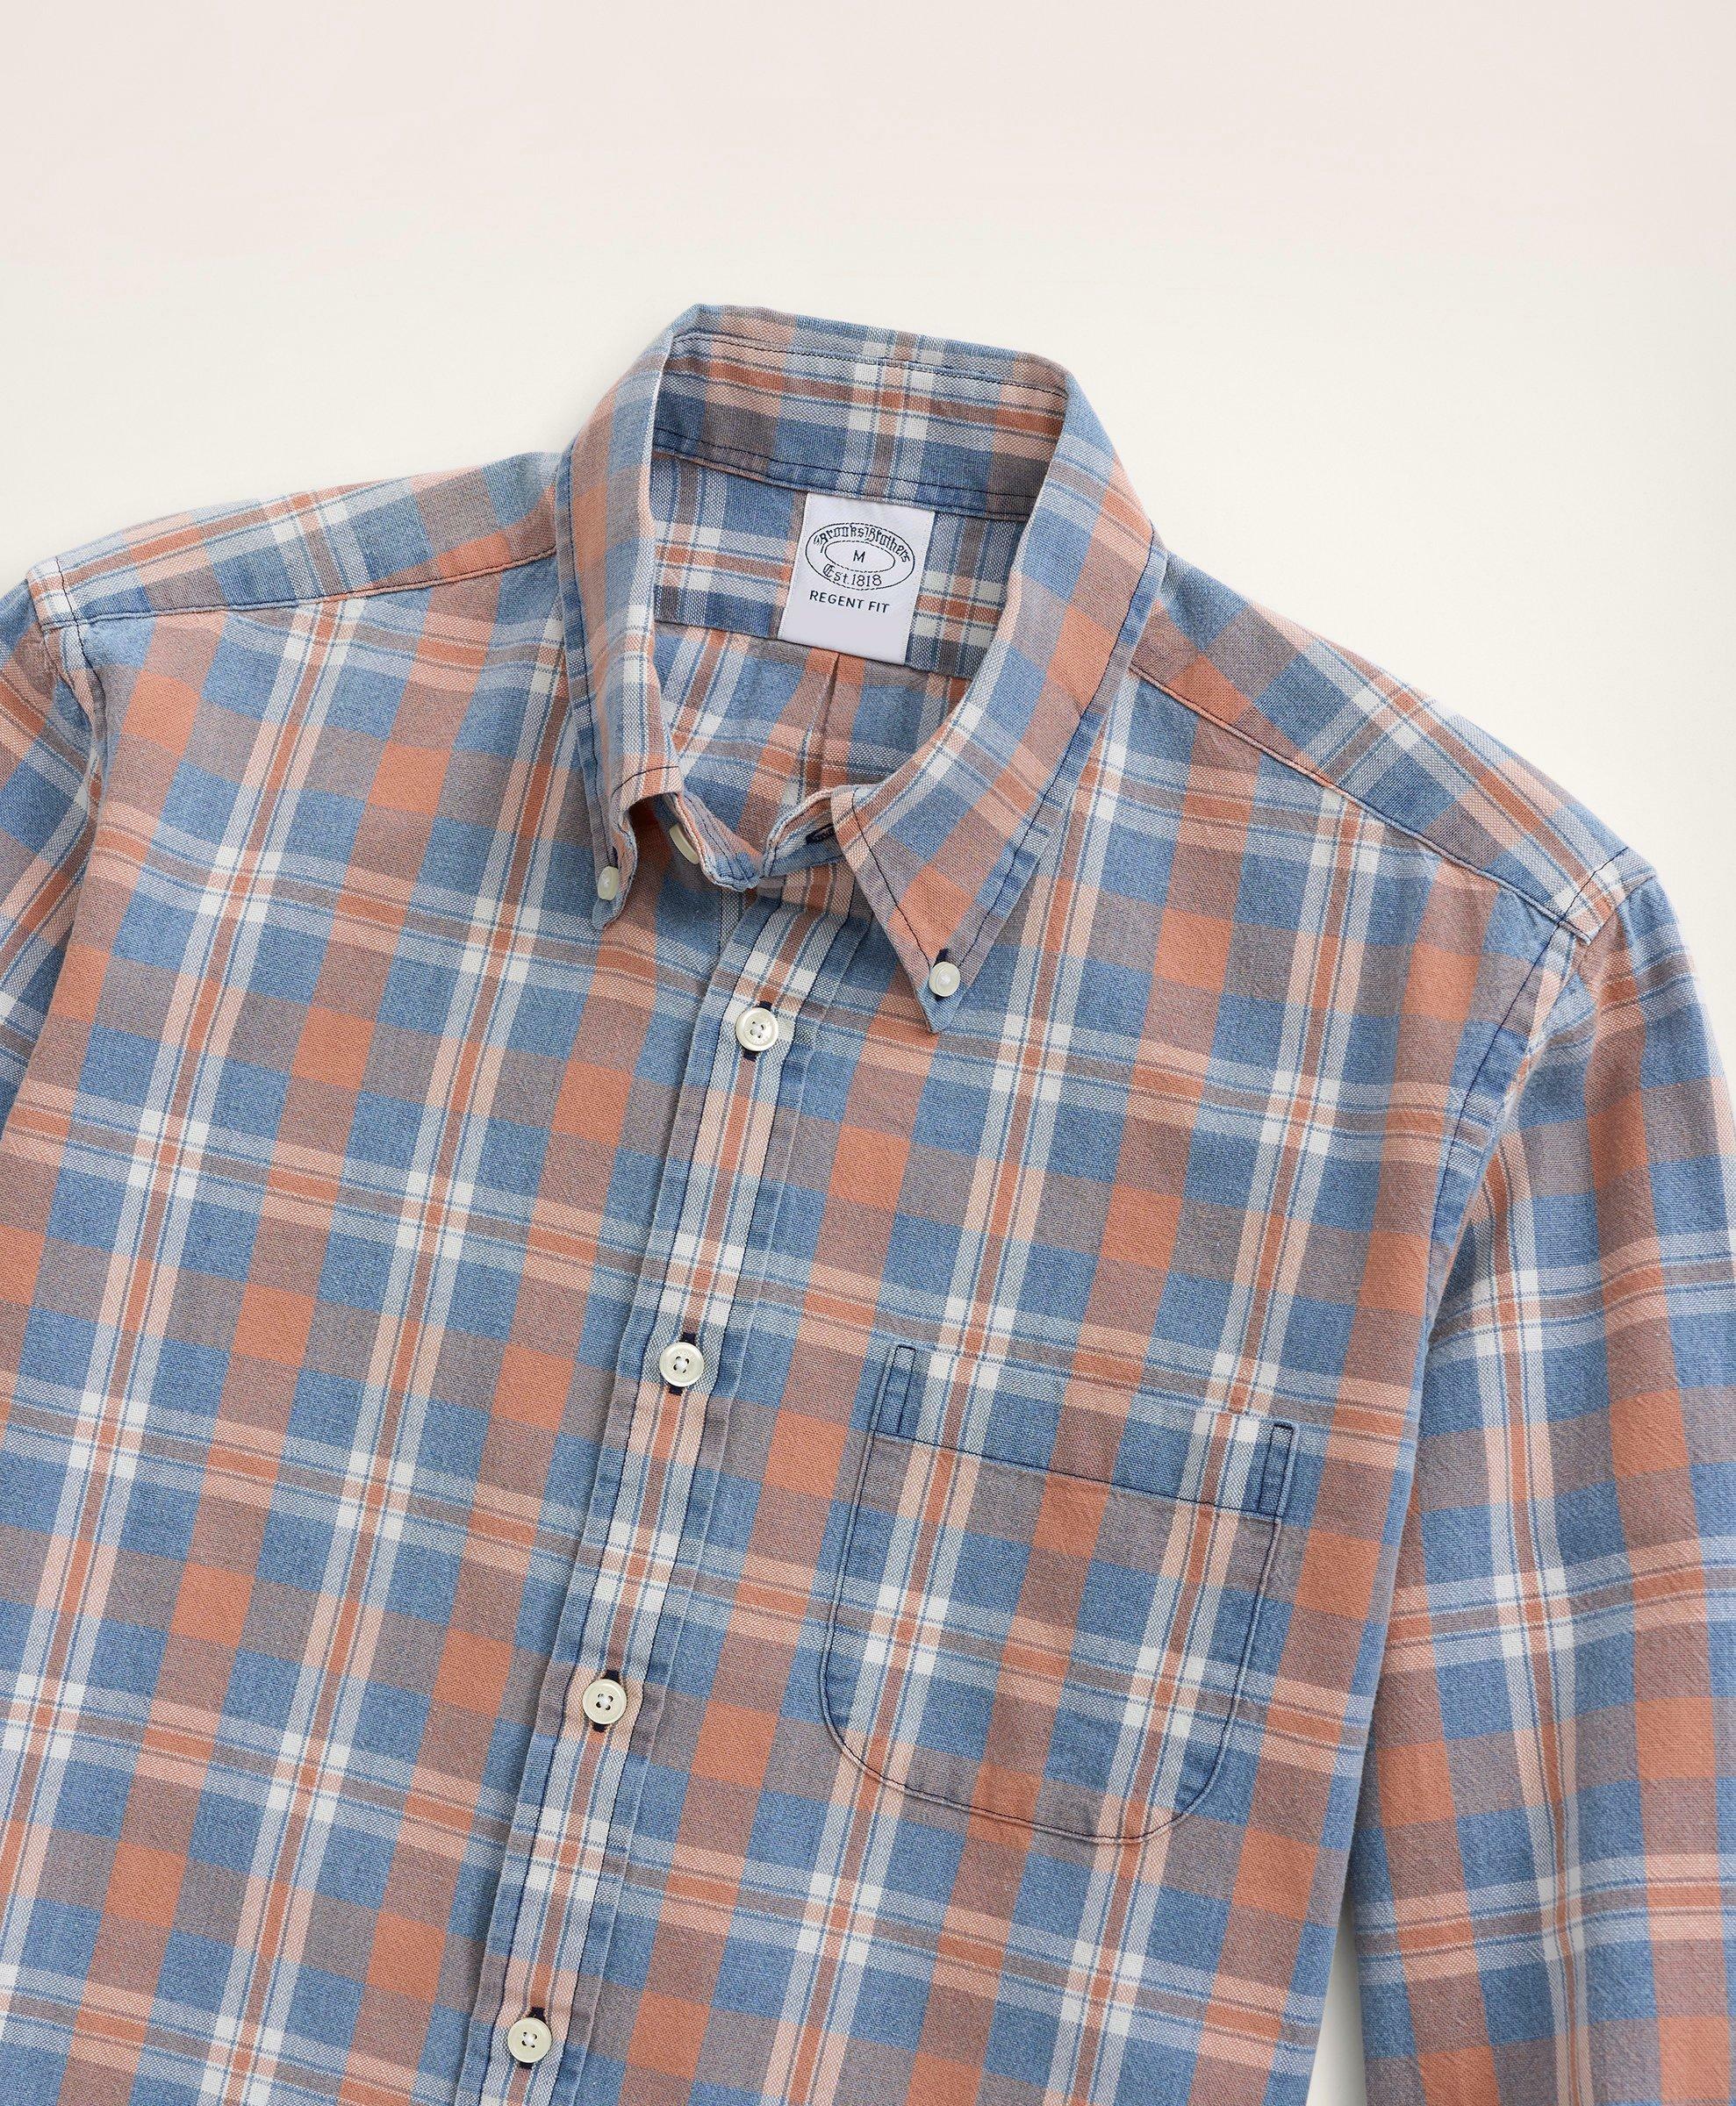 Brooks Brothers Men's Regent Regular-Fit Oxford Sport Shirt, Plaid Weave | Indigo/Coral